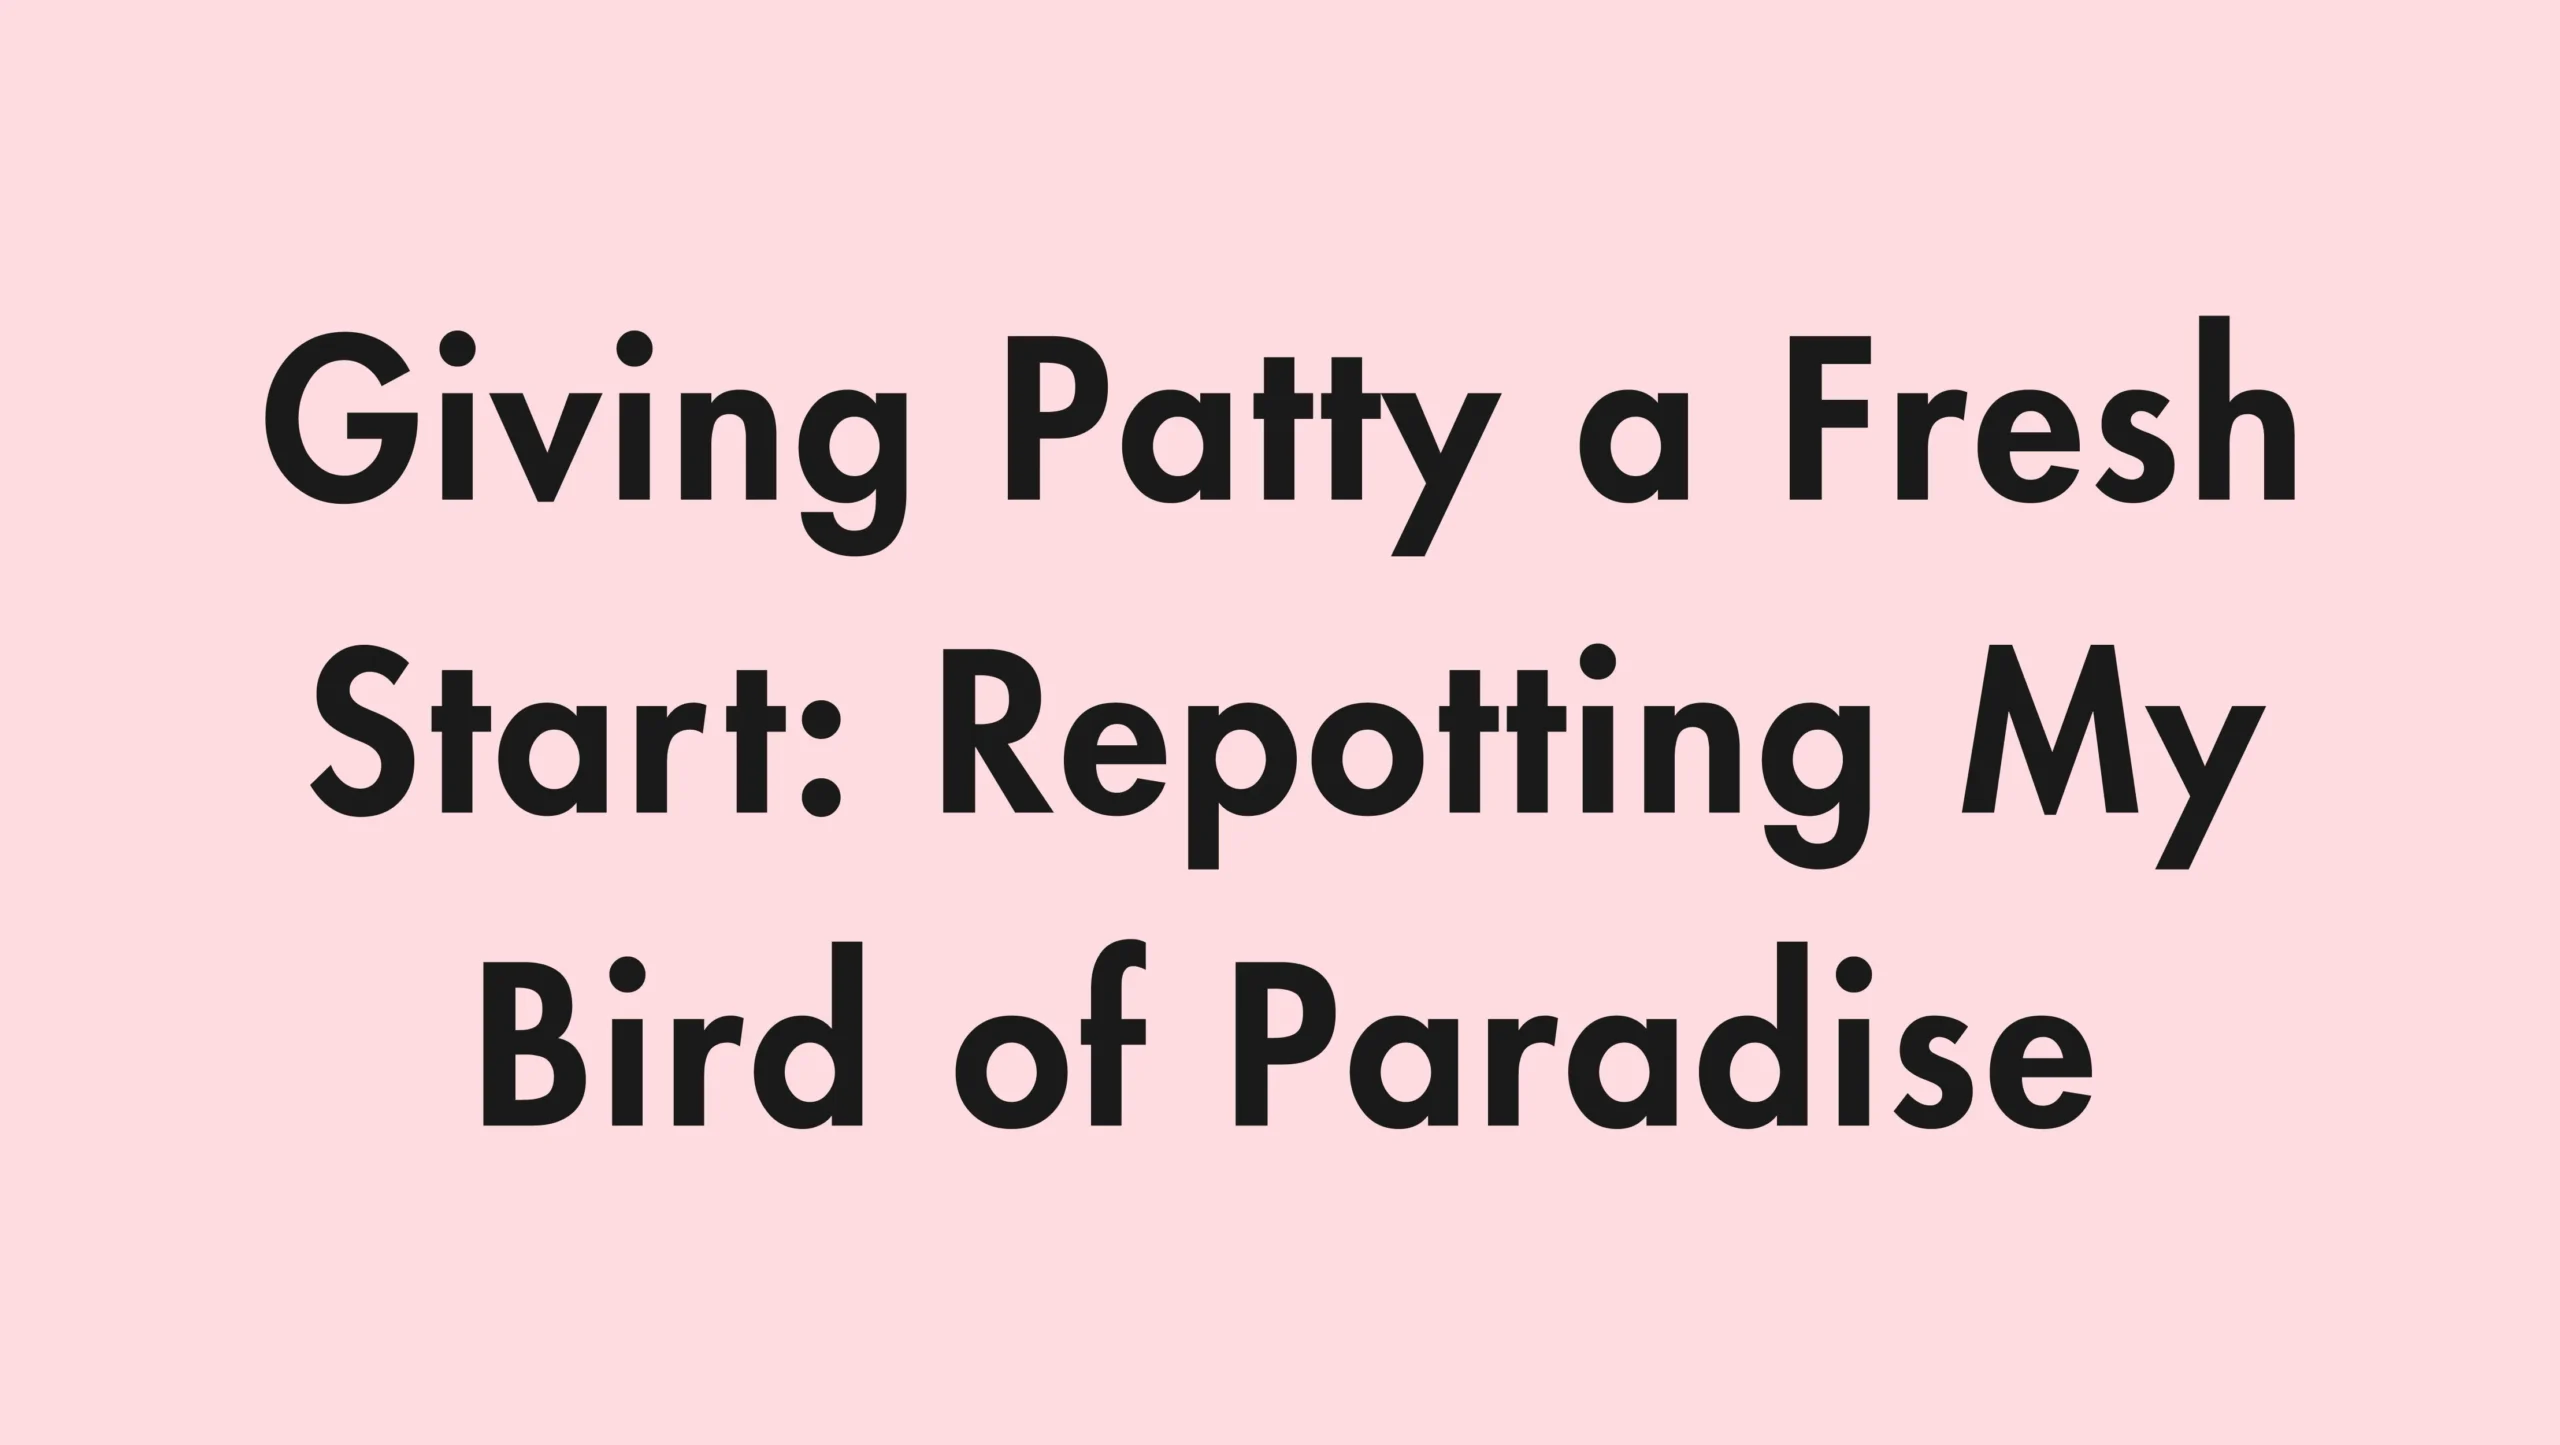 Giving Patty a Fresh Start: Repotting My Bird of Paradise